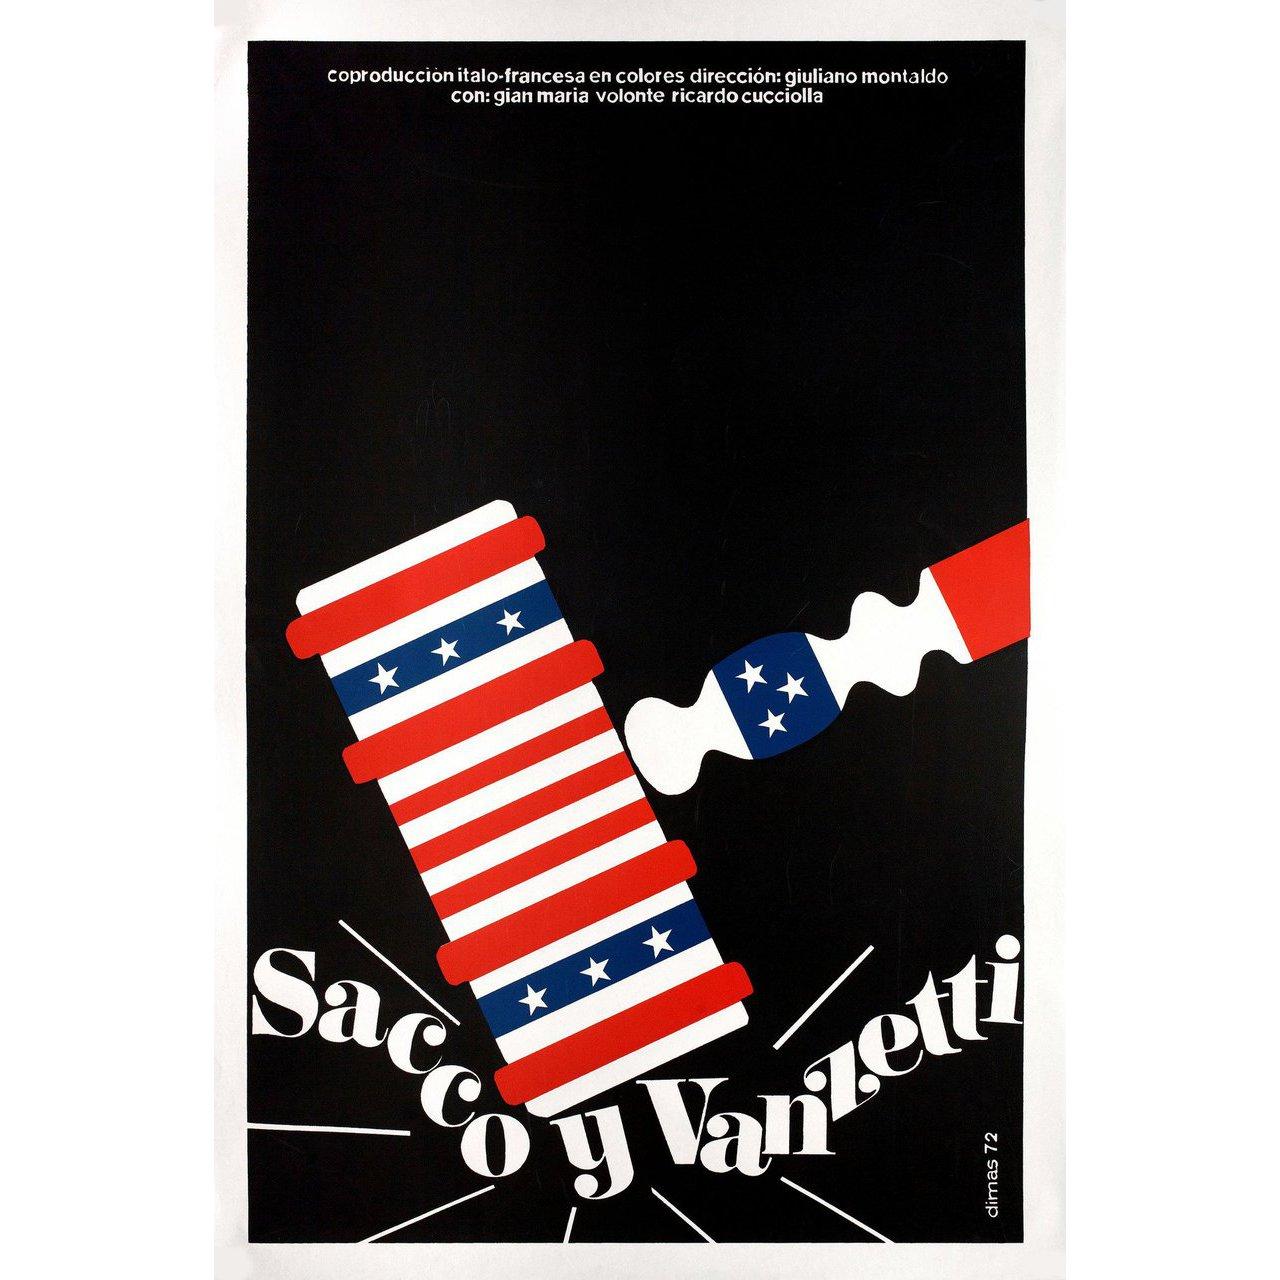 Original 1990s re-release Cuban serigraph poster by Dimas for the 1971 film “Sacco & Vanzetti” (Sacco e Vanzetti) directed by Giuliano Montaldo with Gian Maria Volonte / Riccardo Cucciolla / Cyril Cusack / Rosanna Fratello. Fine condition, rolled.